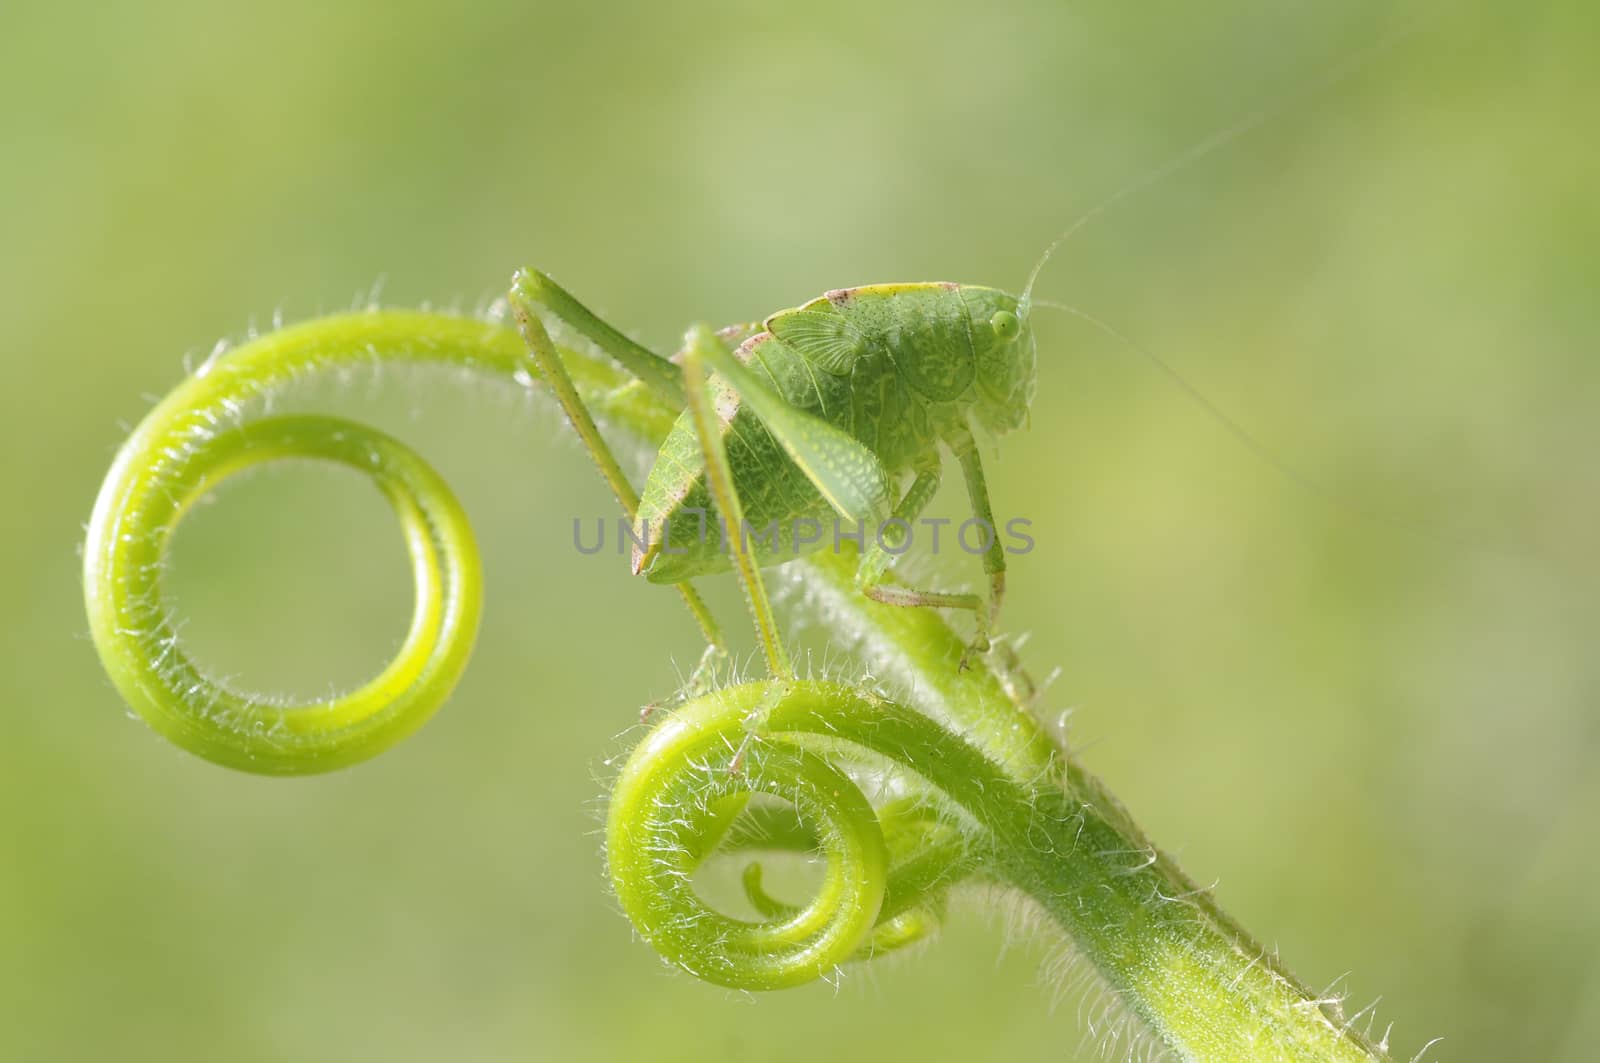 greater angle-wing katydid (Microcentrum rhombifolium) by Njean